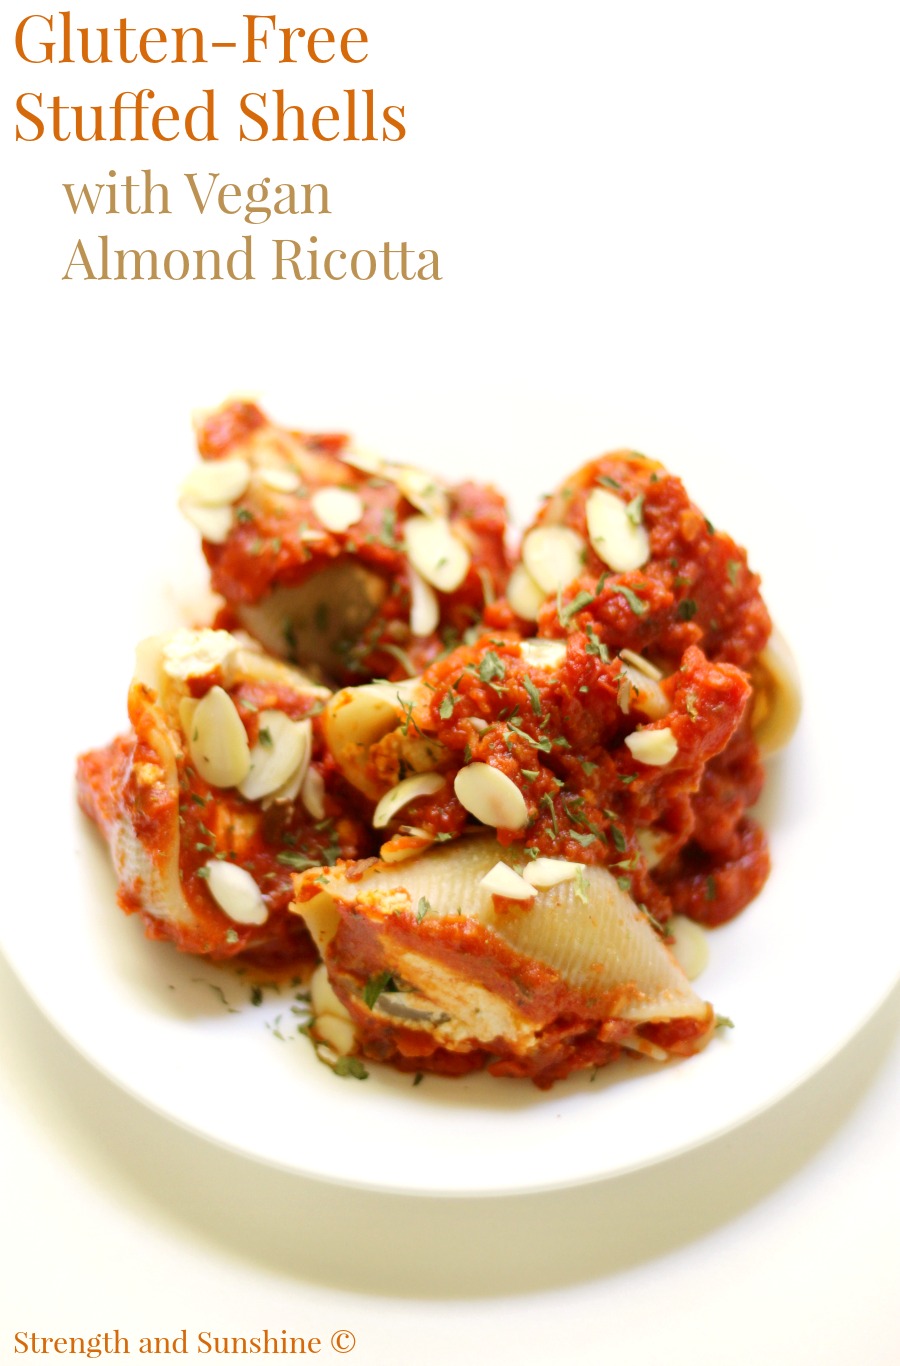 Gluten-Free Stuffed Shells with Vegan Almond Ricotta